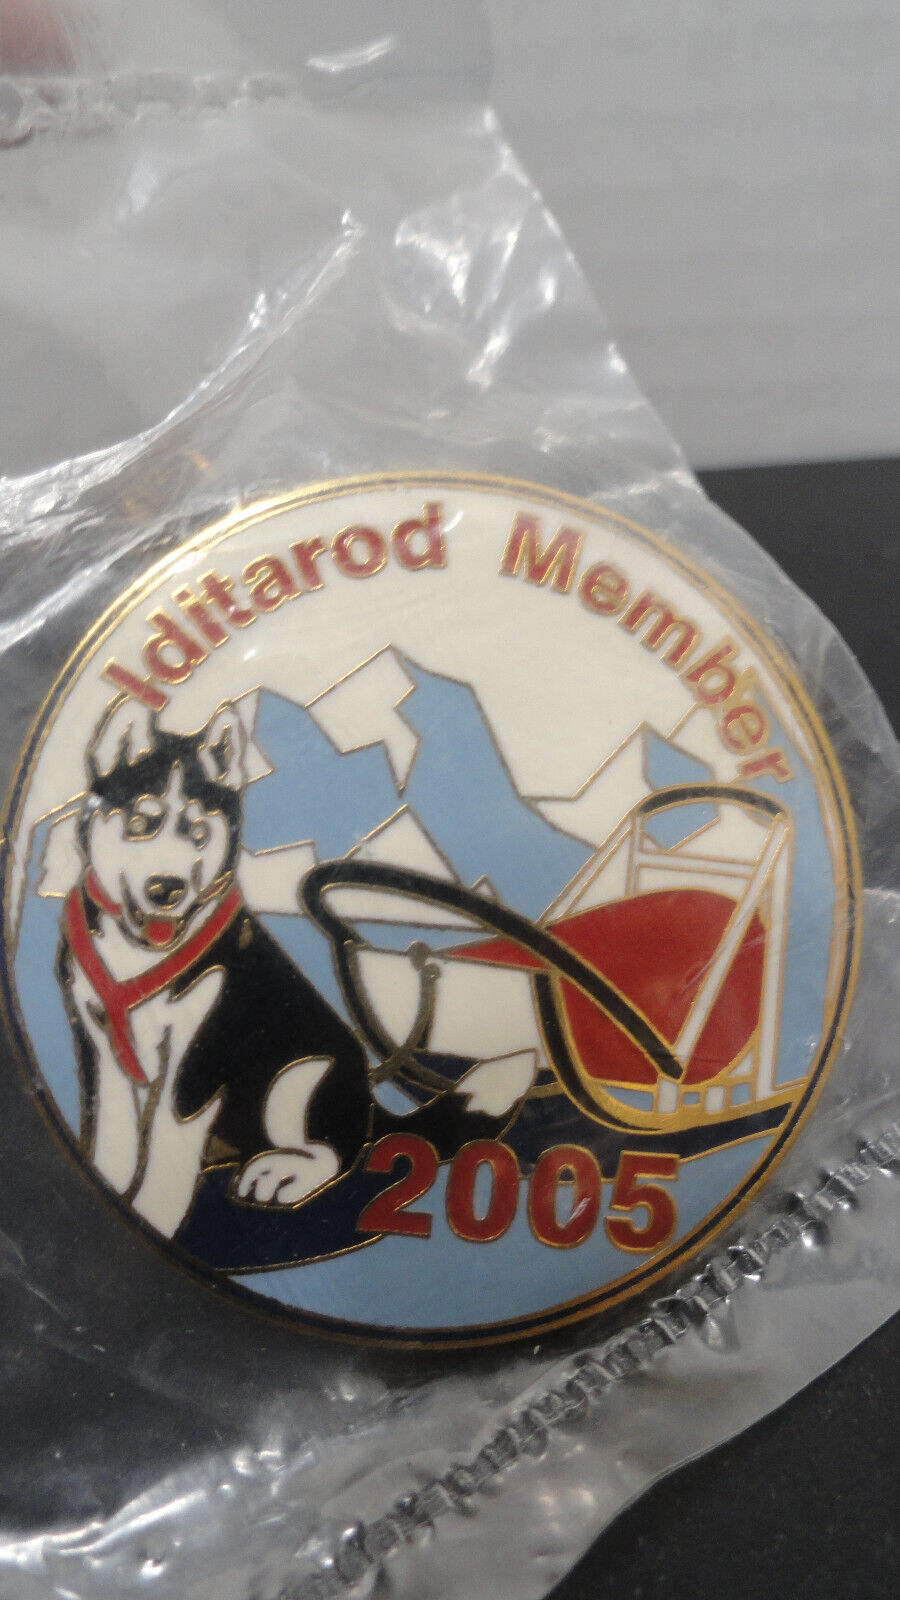 Alaska Iditarod Member 2005 Tie Back Pin New in Sealed Package Almost Vintage